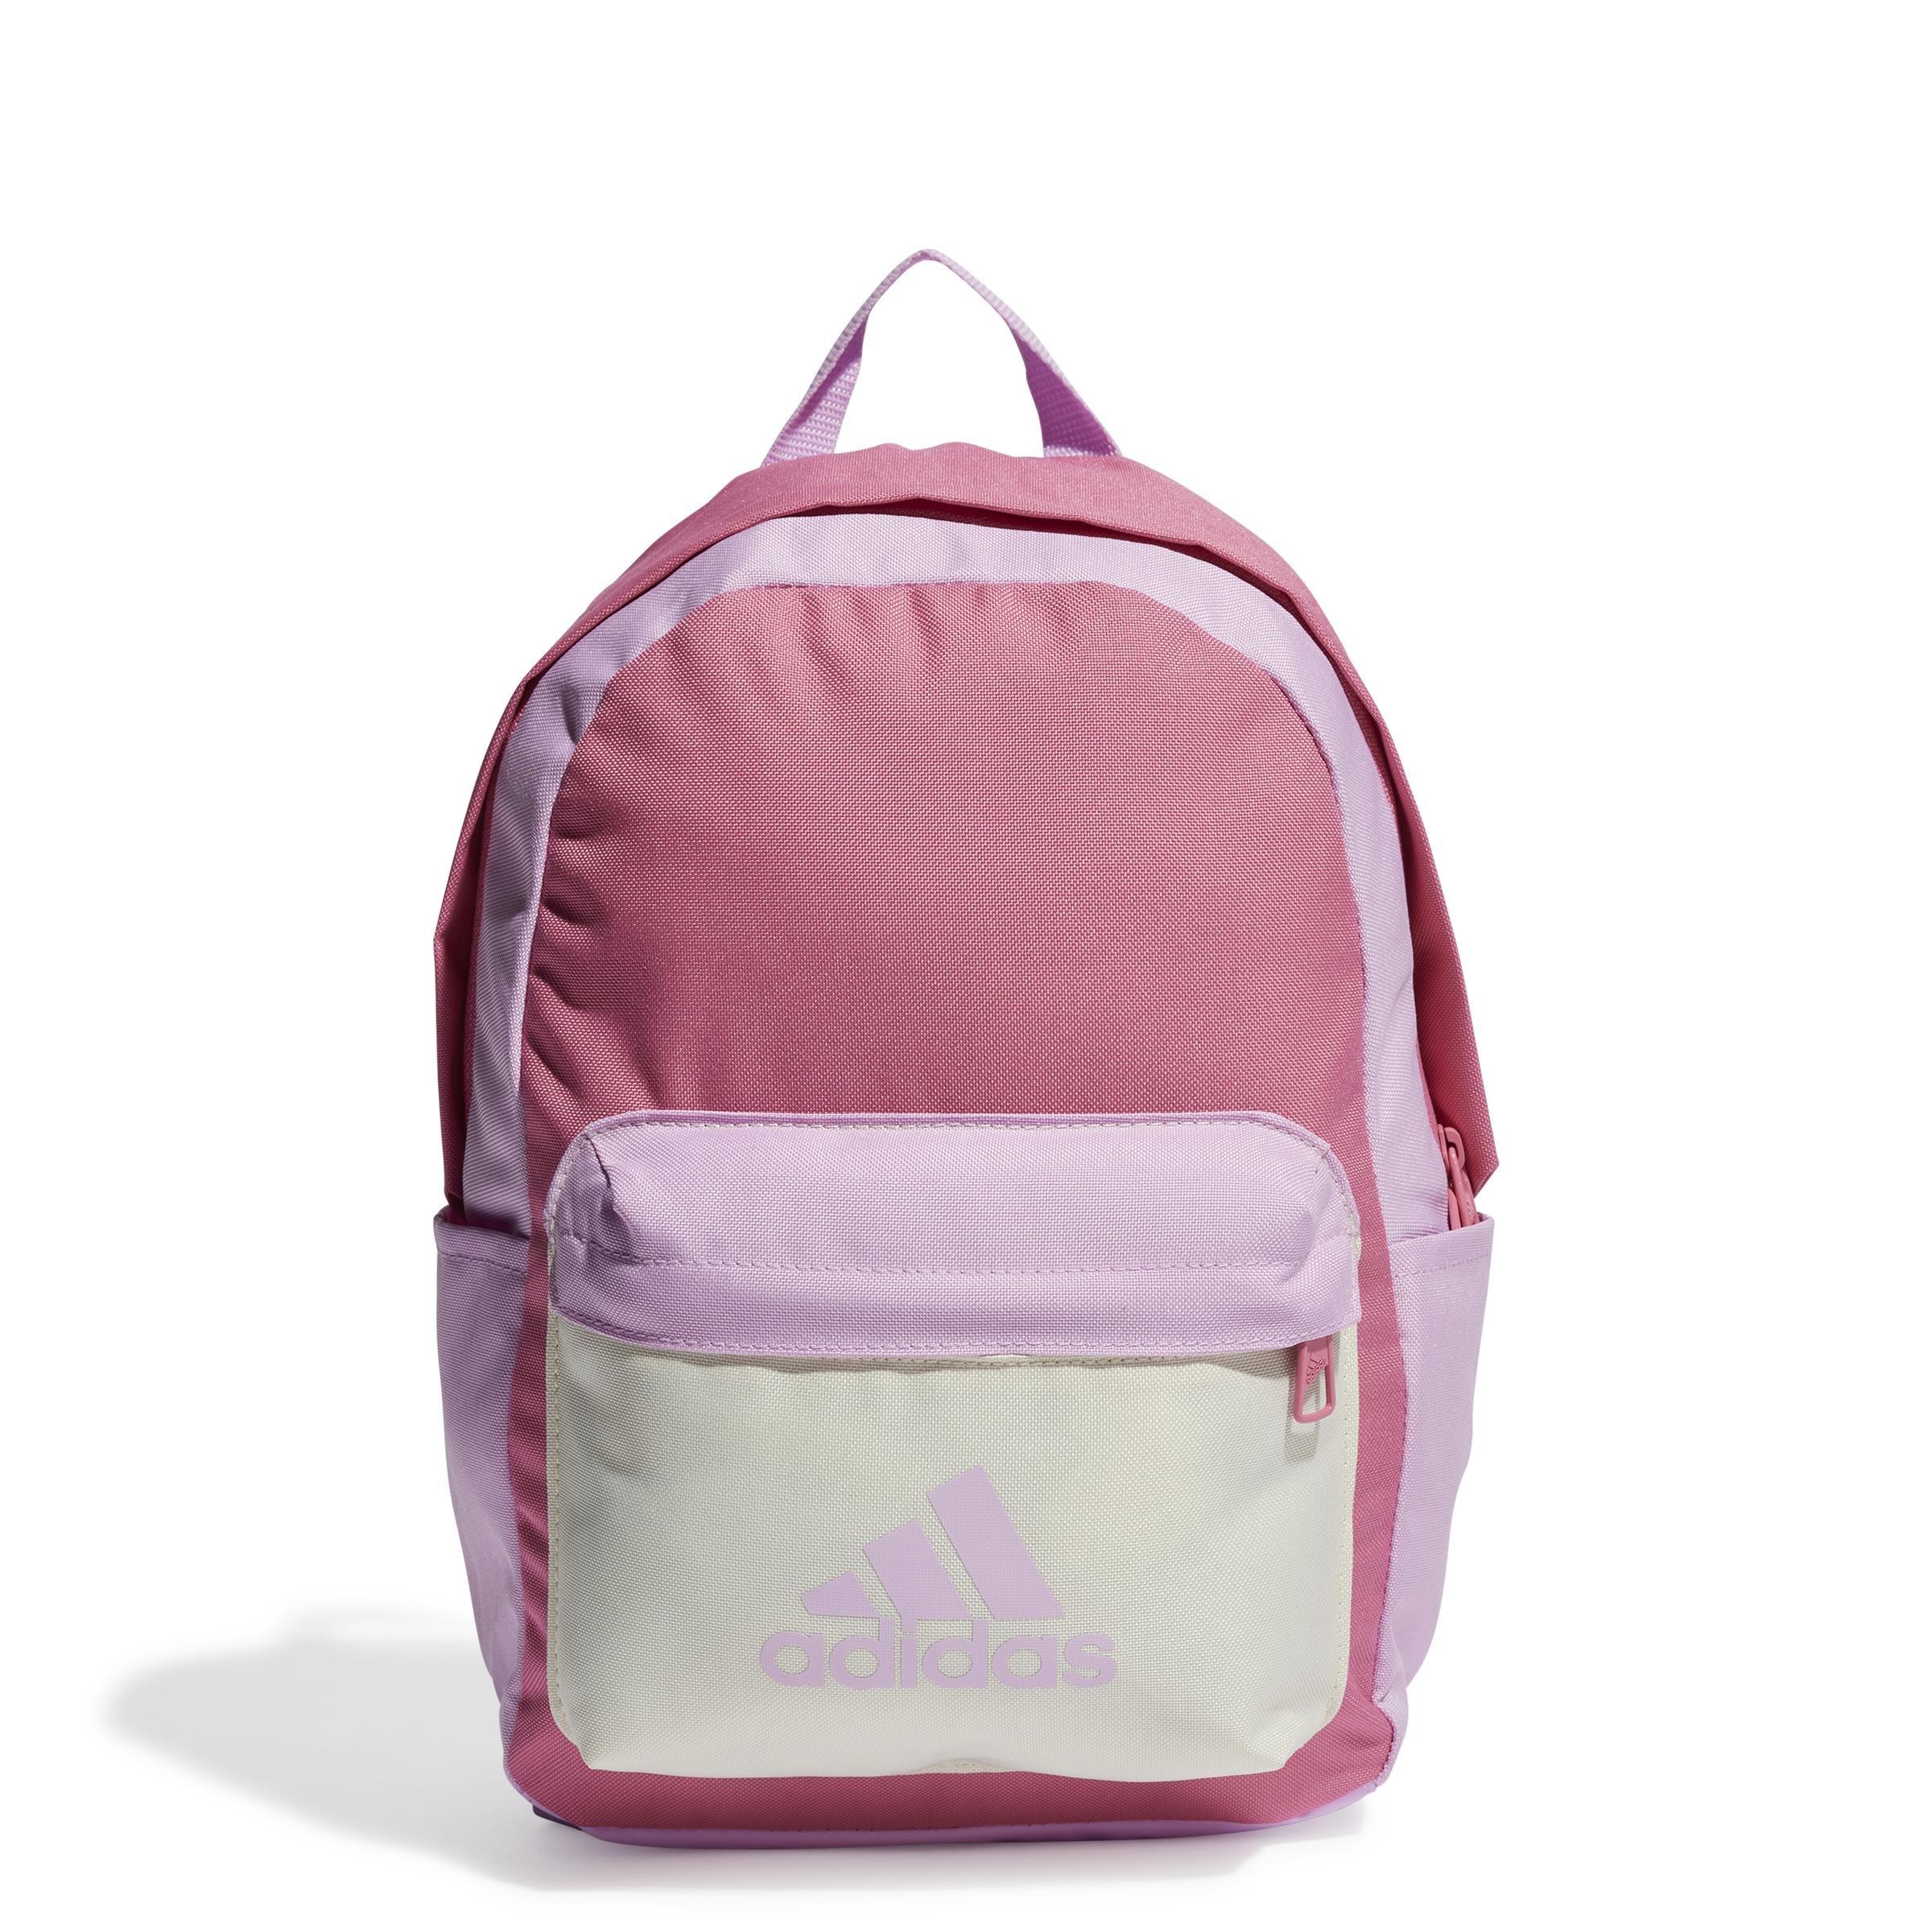 adidas - Kids Unisex Backpack, Pink